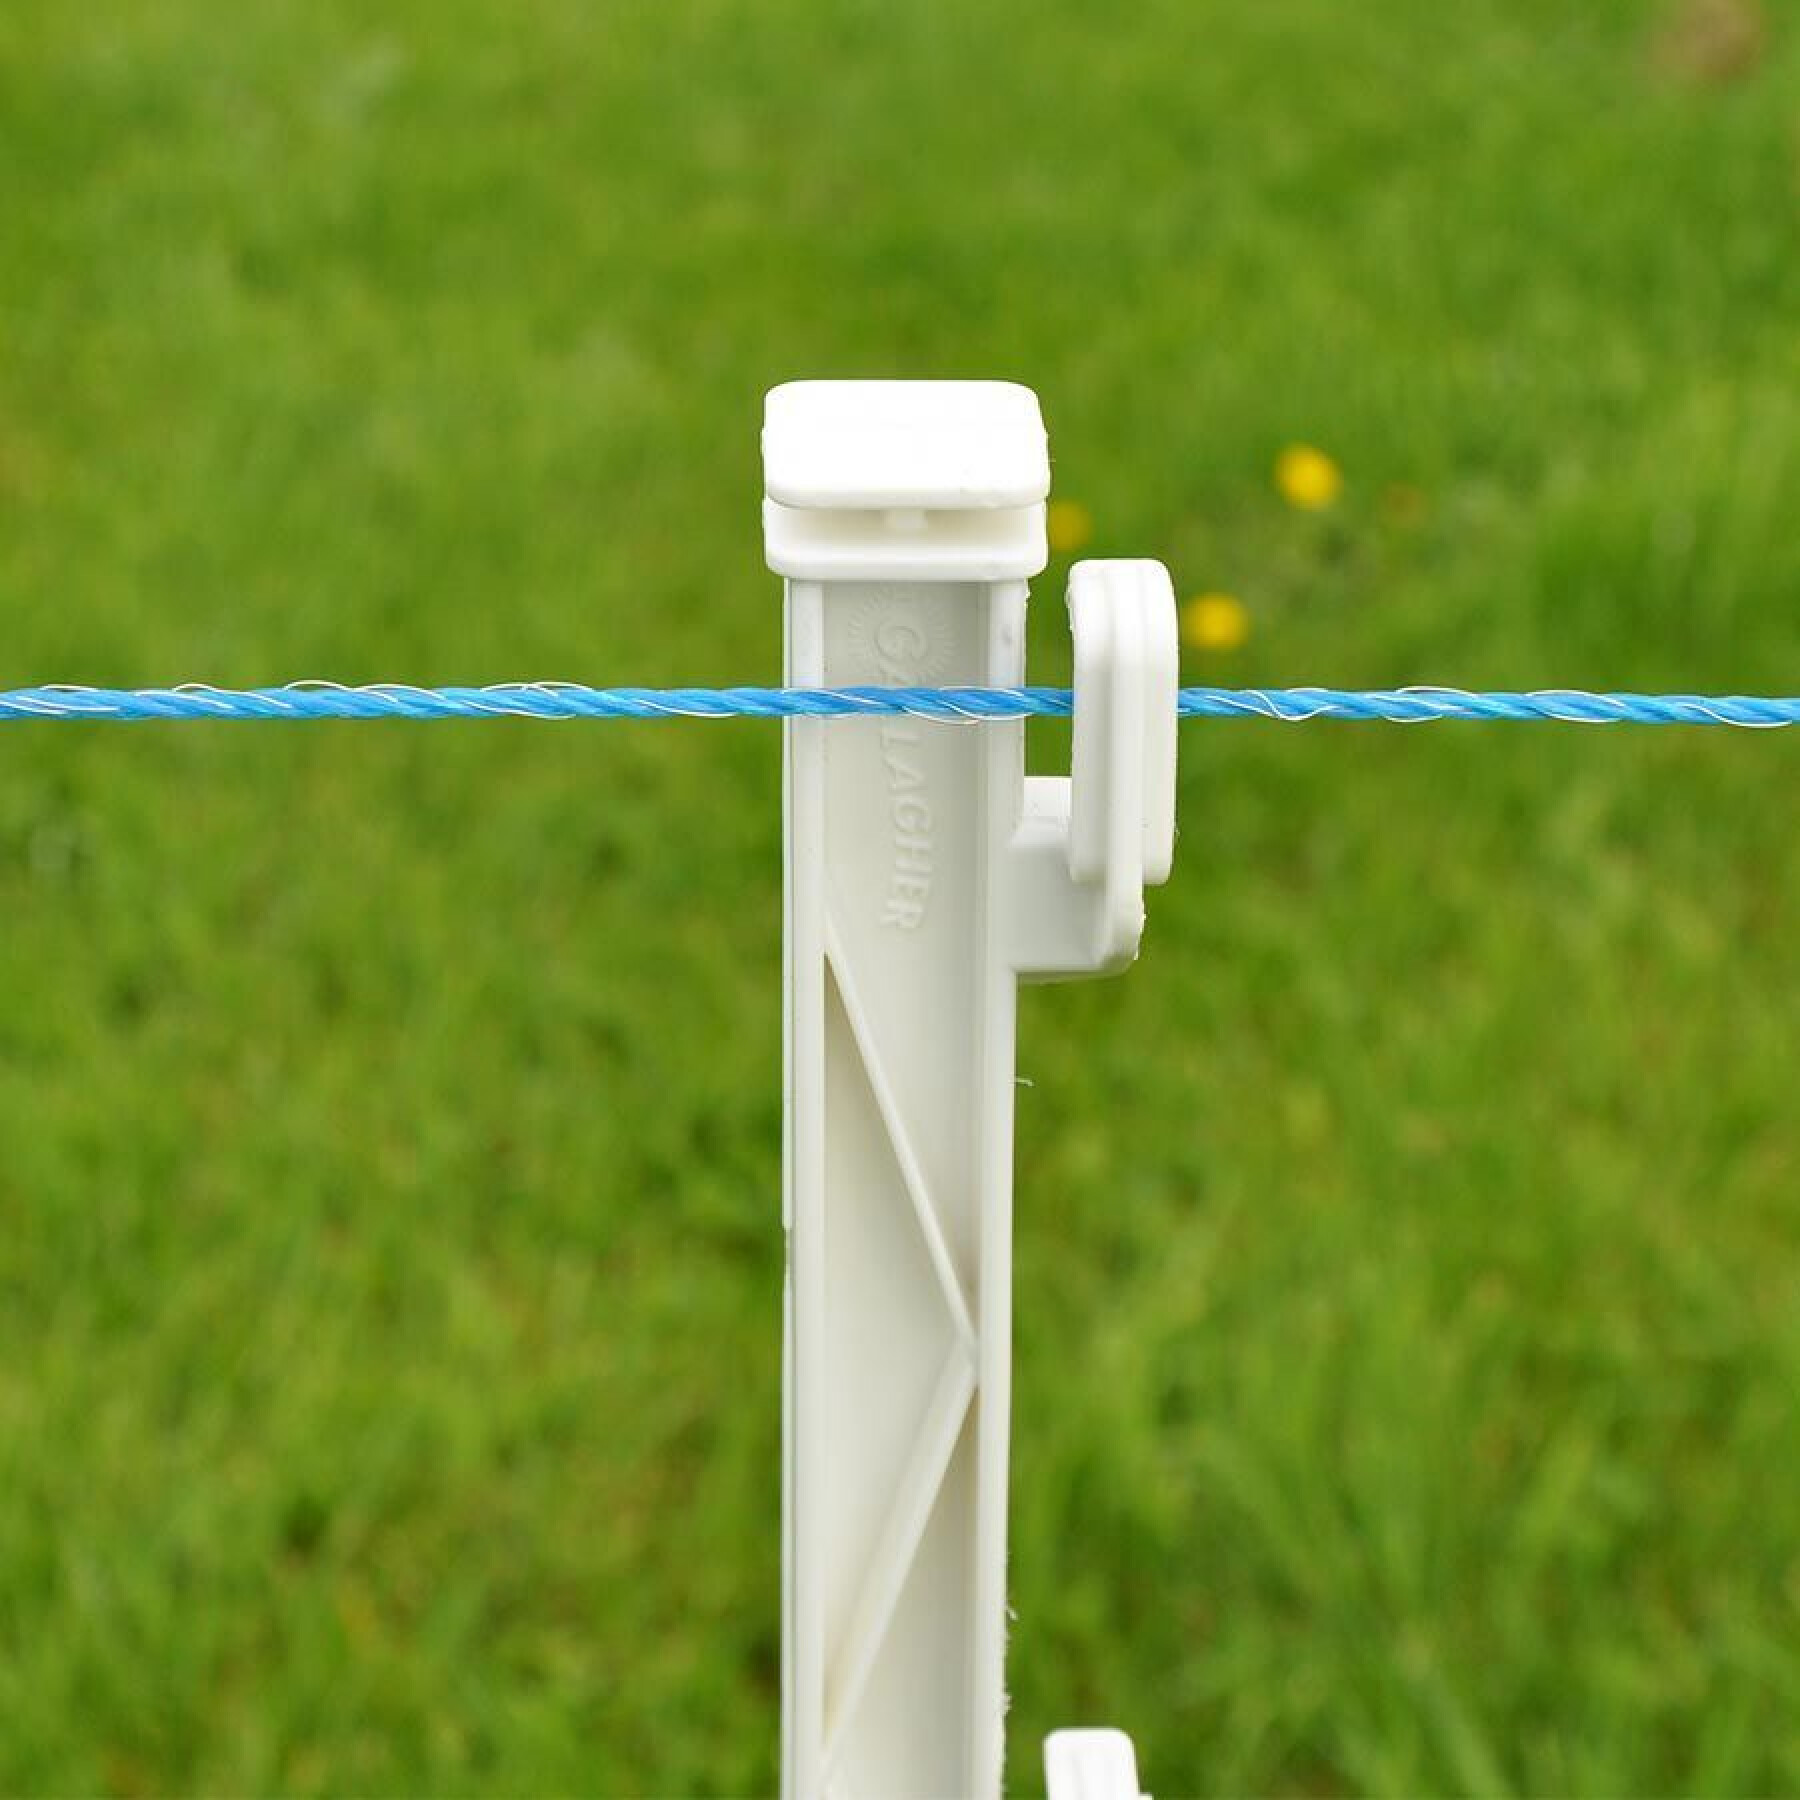 Cuerda para vallas sintéticas Gallagher TurboLine (x2)